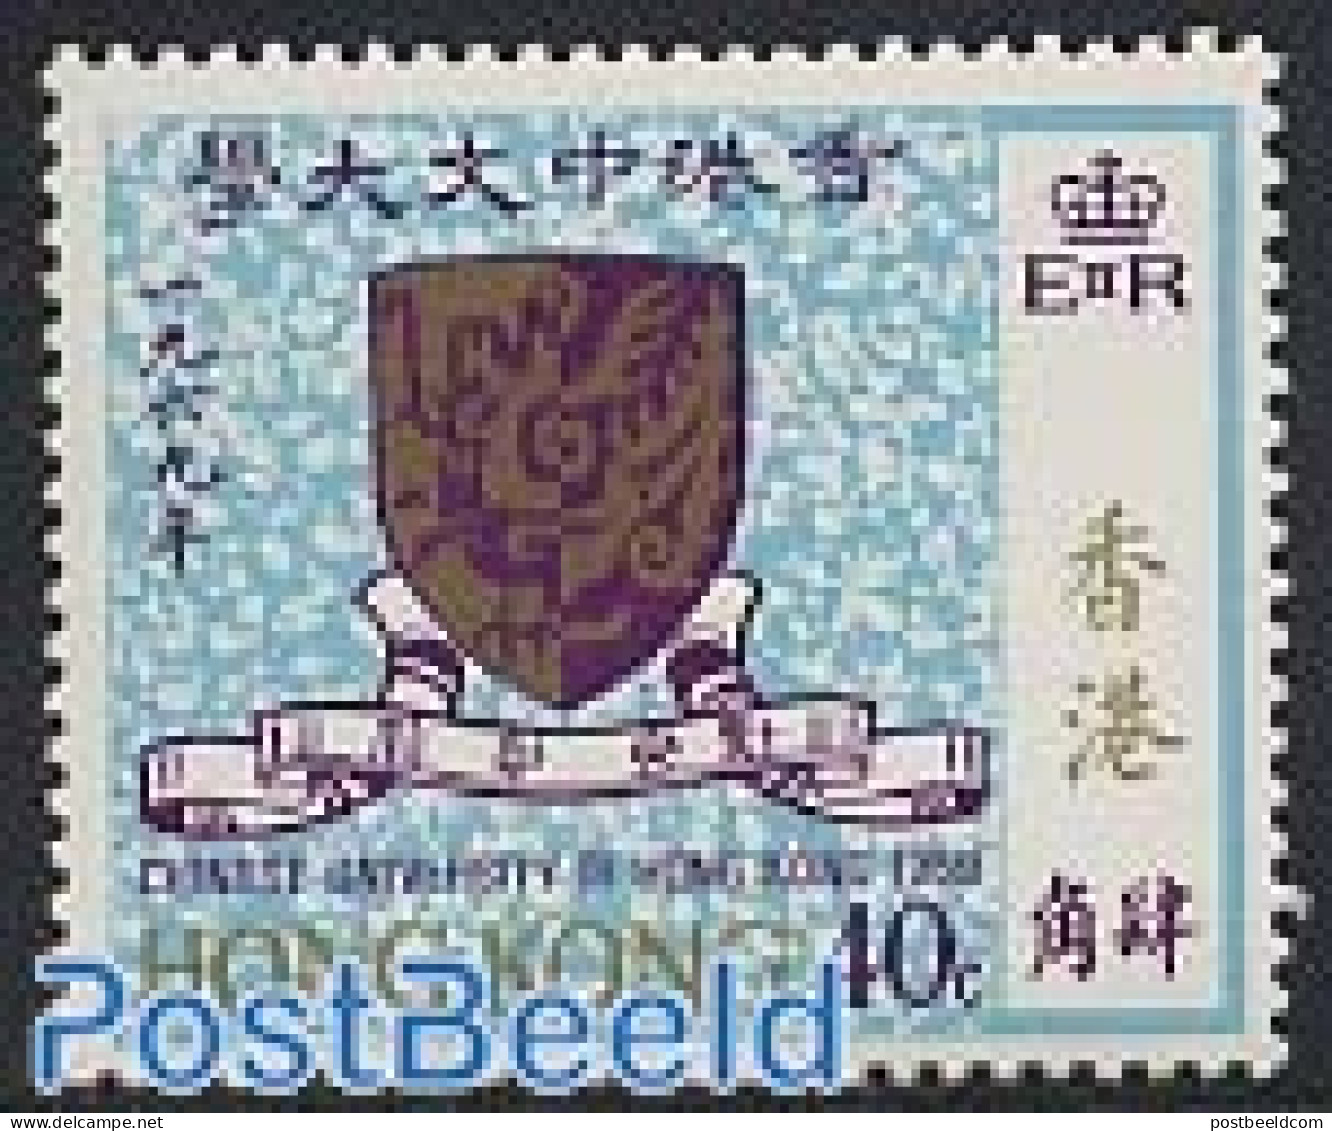 Hong Kong 1969 Chinese University 1v, Mint NH, History - Science - Coat Of Arms - Education - Nuovi